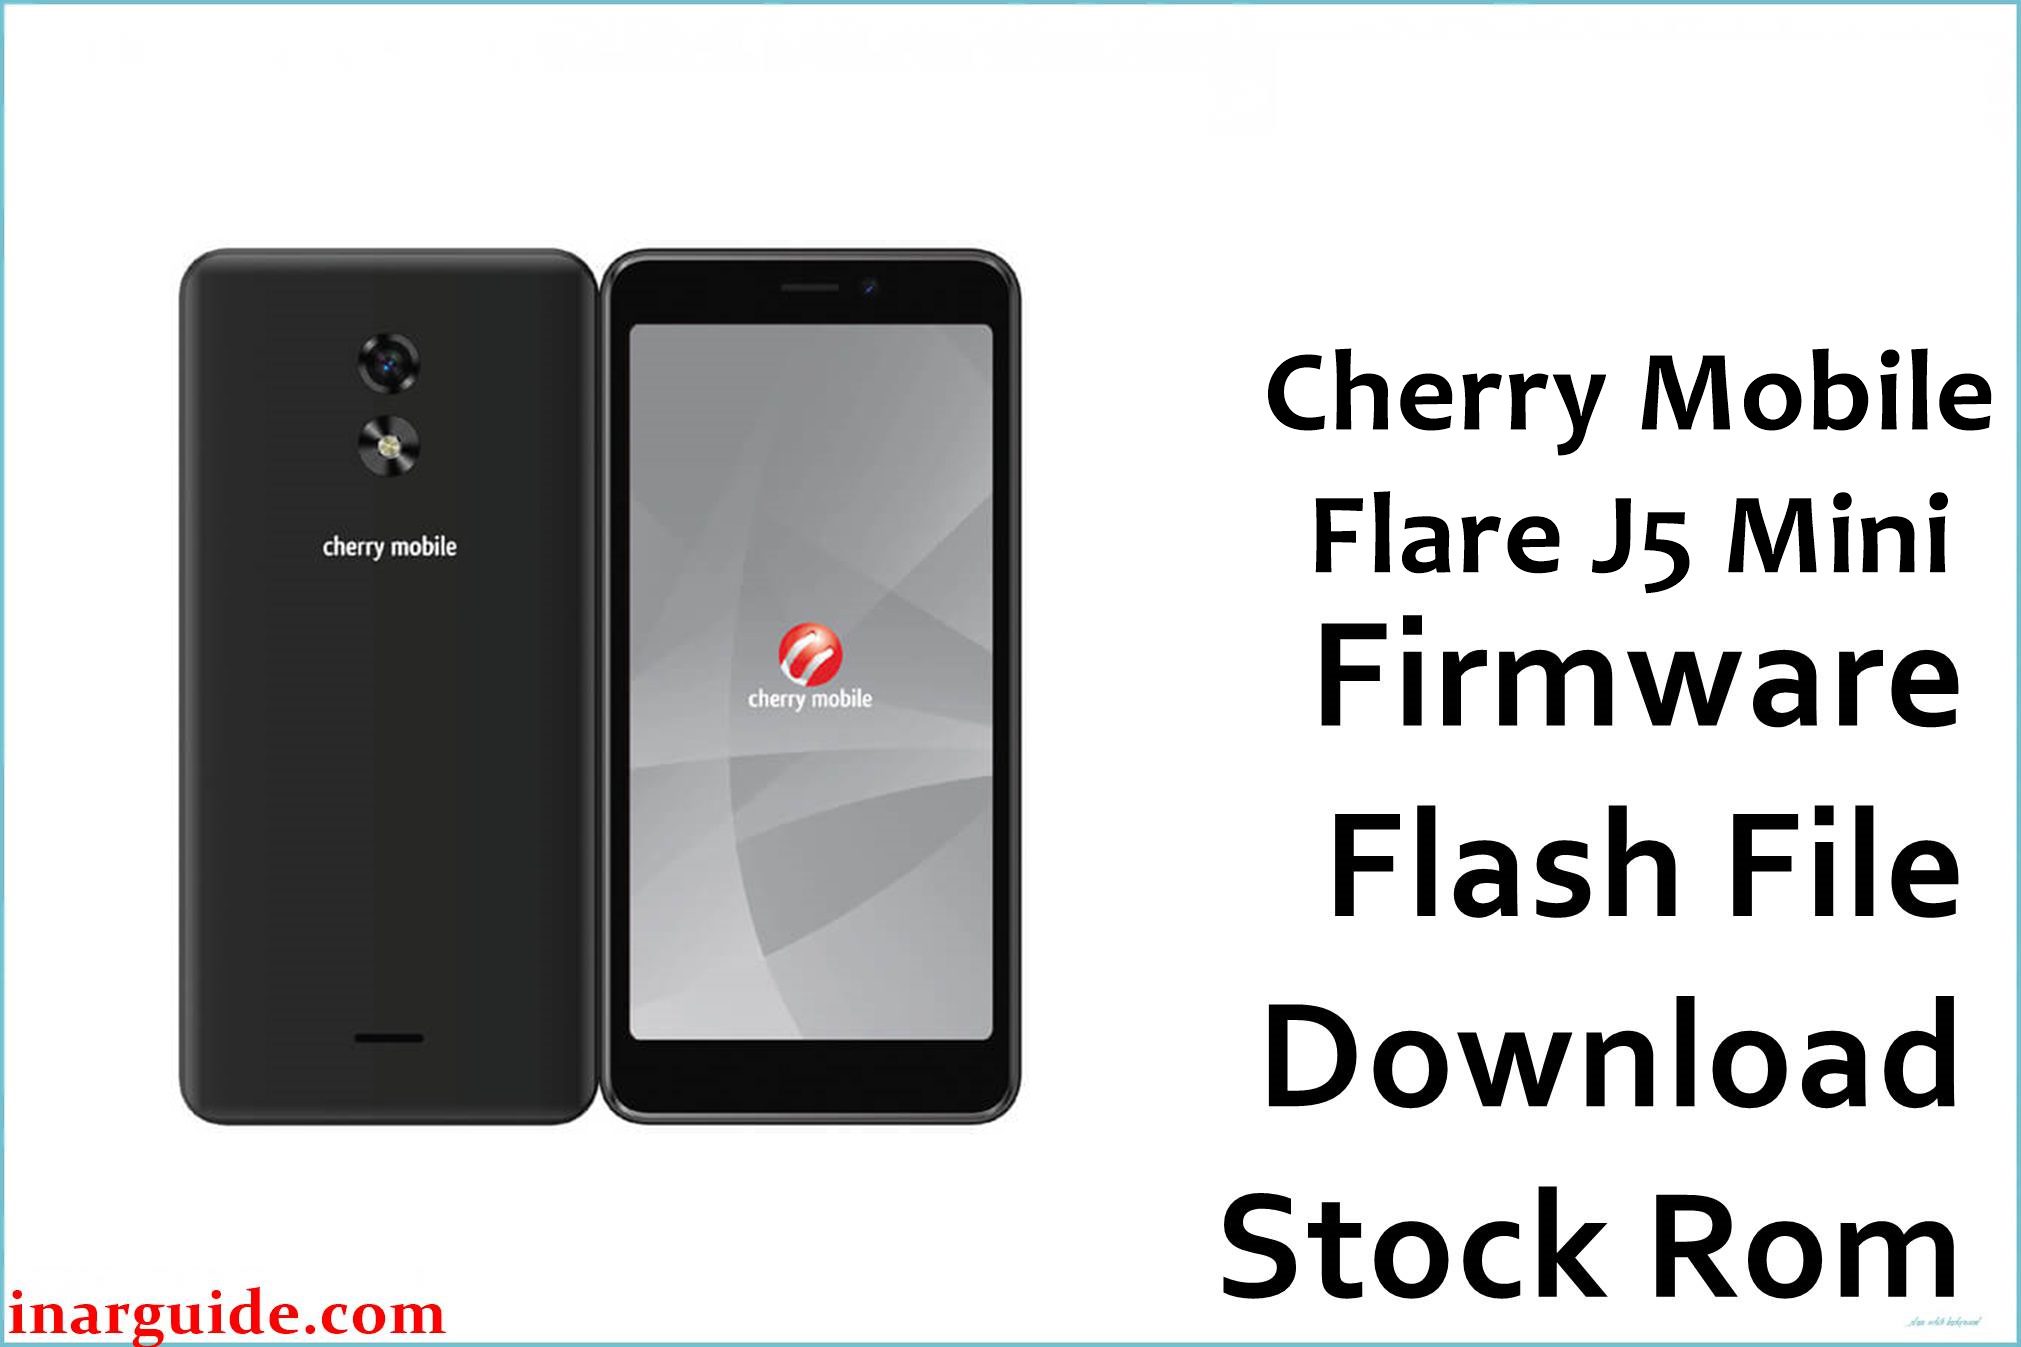 Cherry Mobile Flare J5 Mini